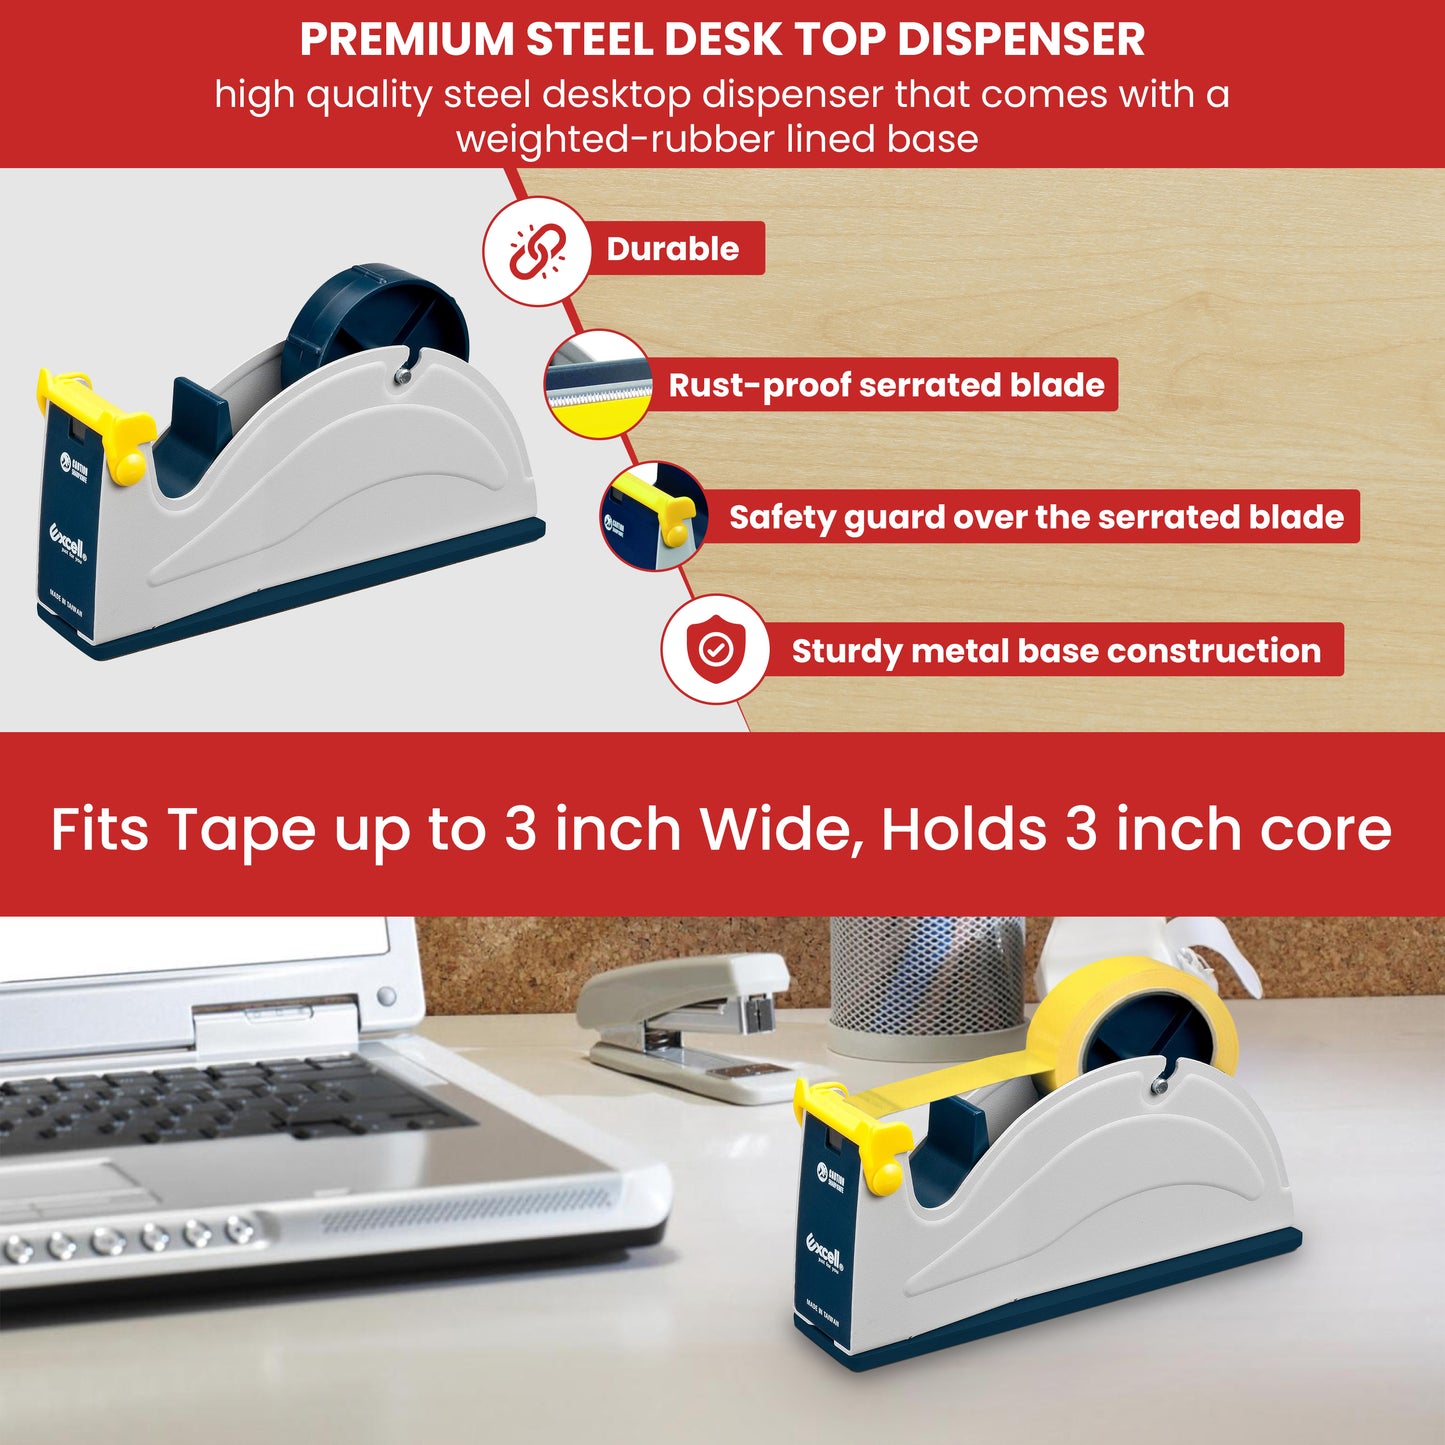 Excell ET-7 Blue/Grey Premium Steel Desk Top Tape Dispenser